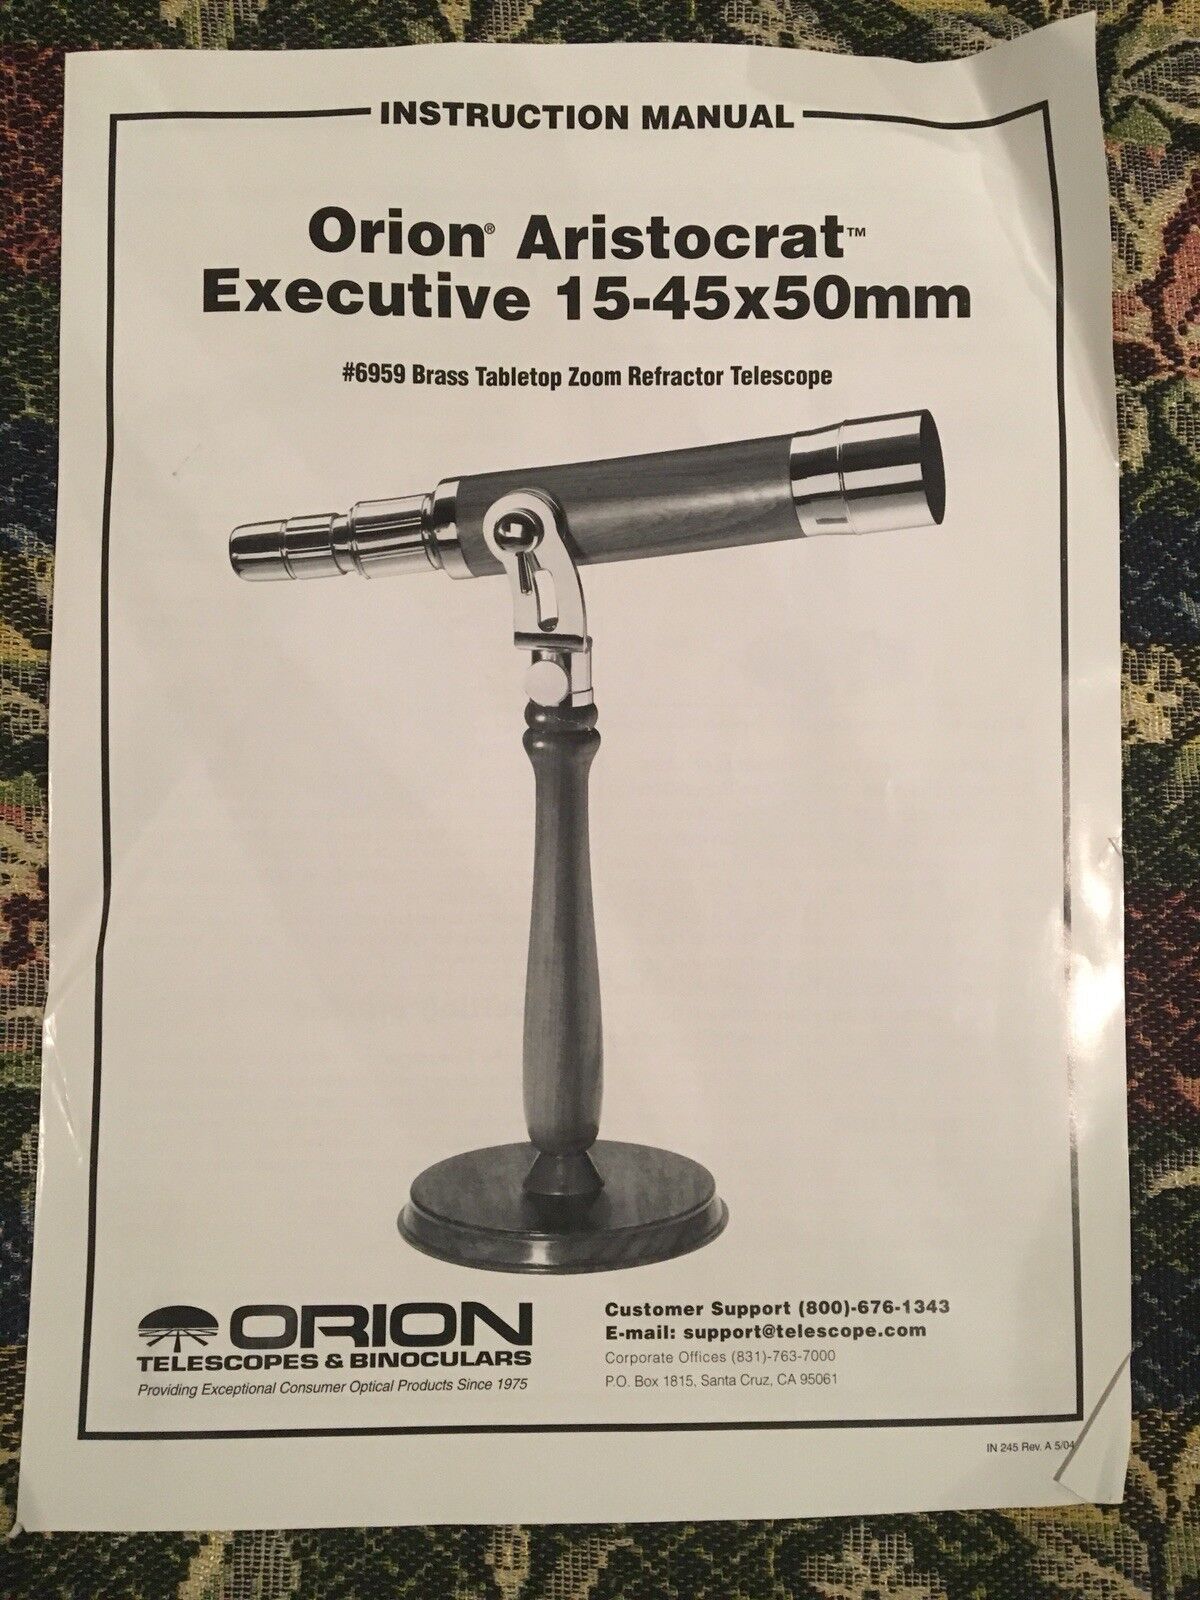 Orion Aristocrat Executive 15-45x50mm Brass Telescope 